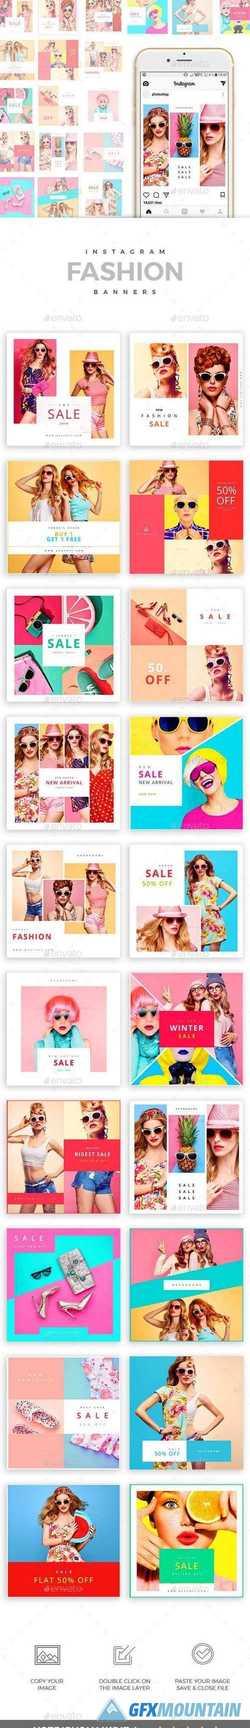 20 - Fashion Instagram Banners 21158757